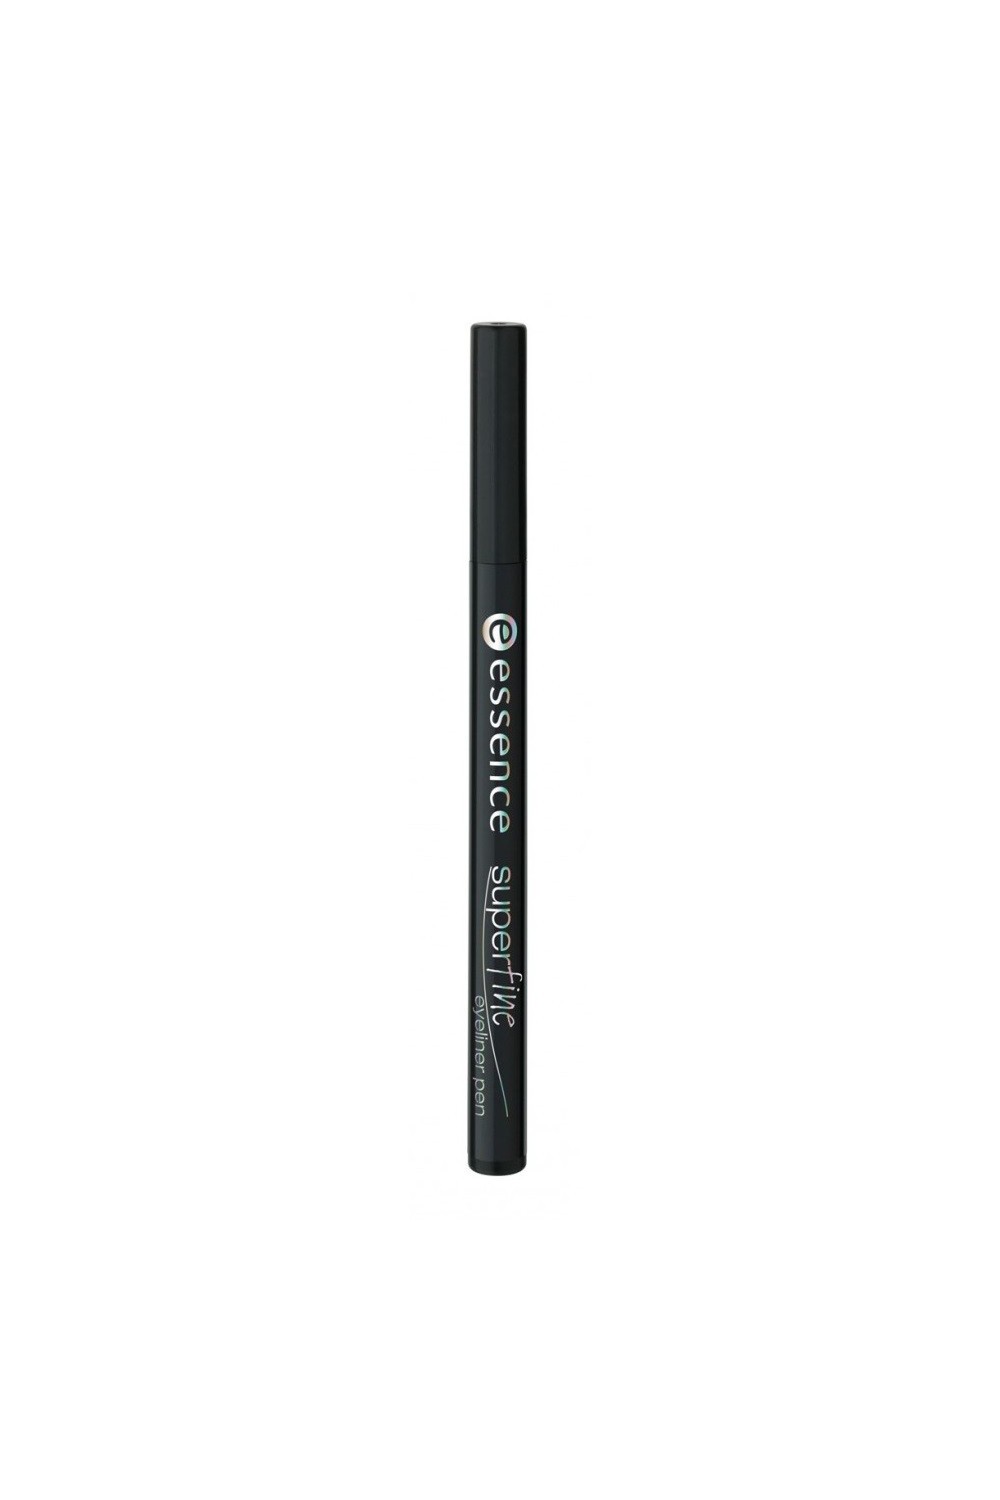 Essence Cosmetics Superfine Rotulador Eyeliner Super Fino 01 1ml